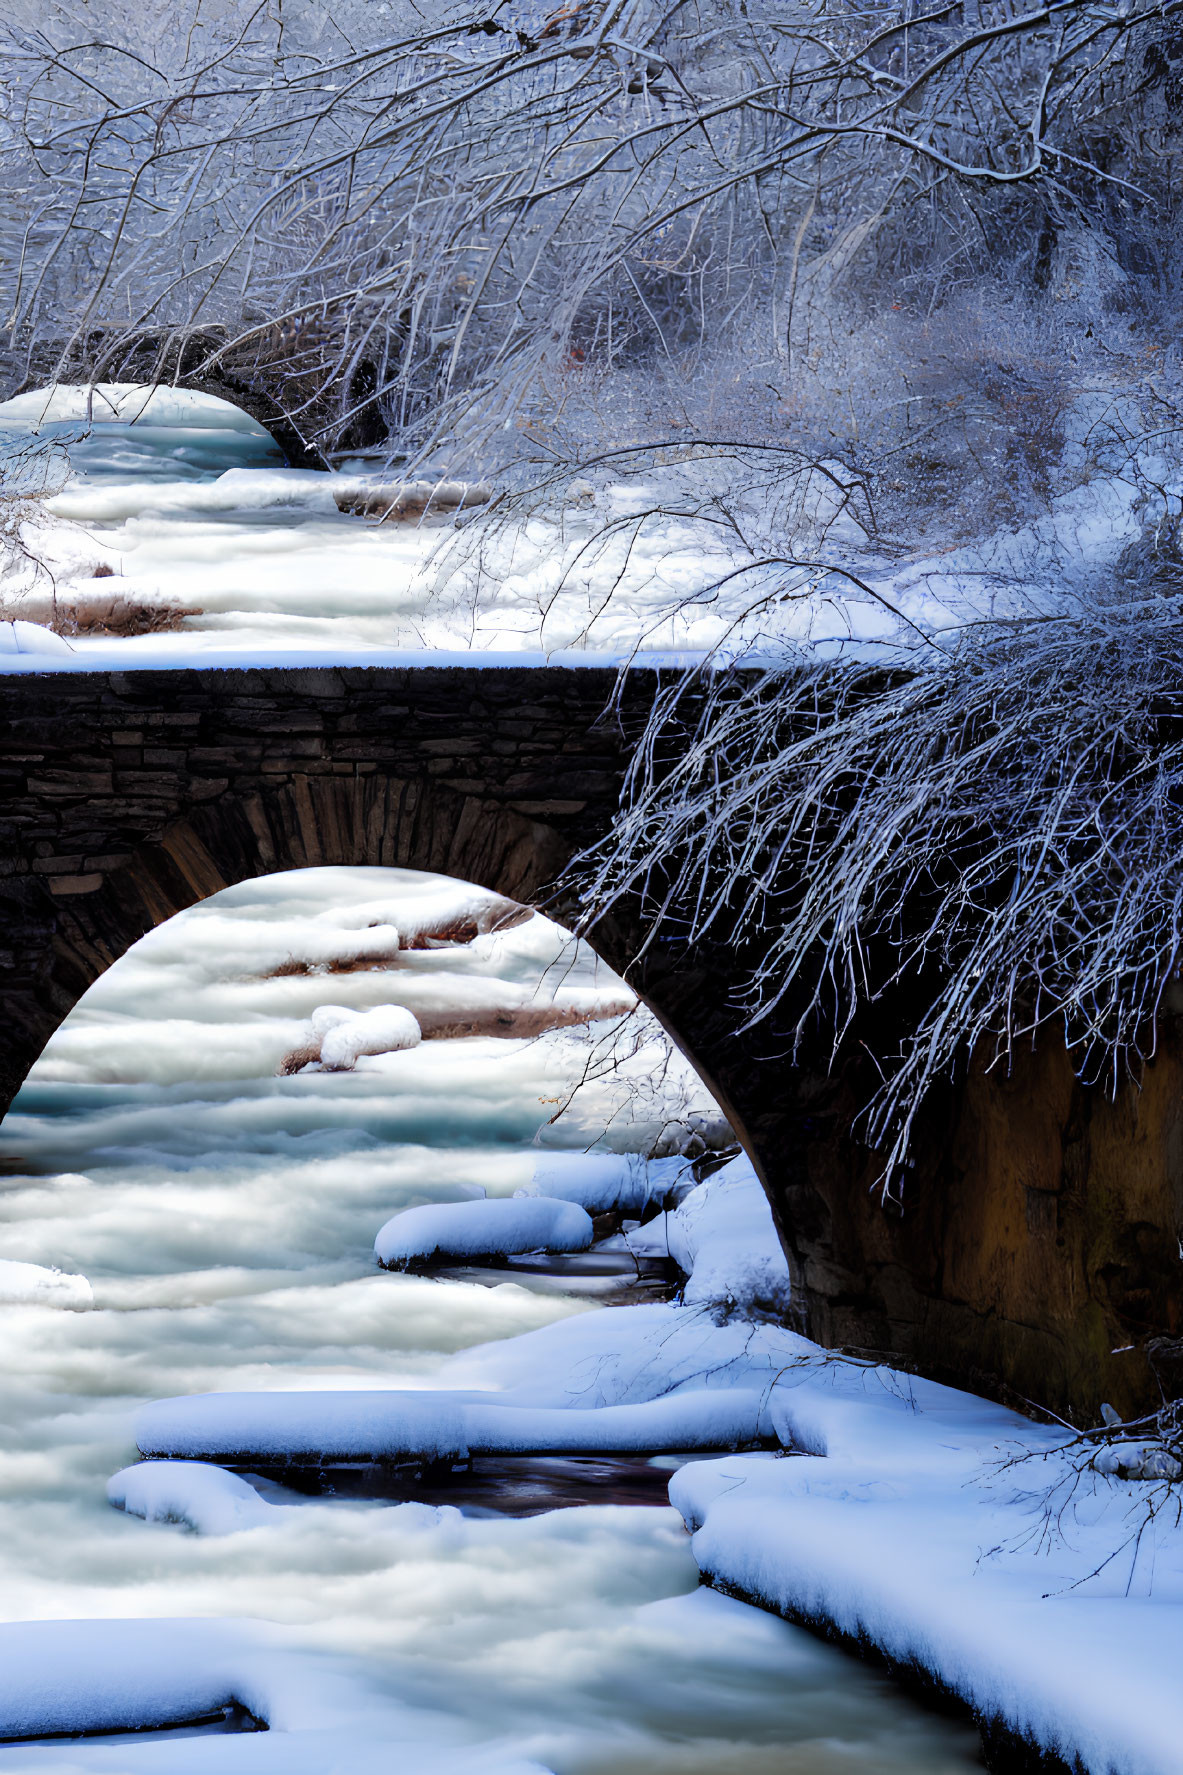 Snow-covered stone bridge over frozen creek in winter landscape